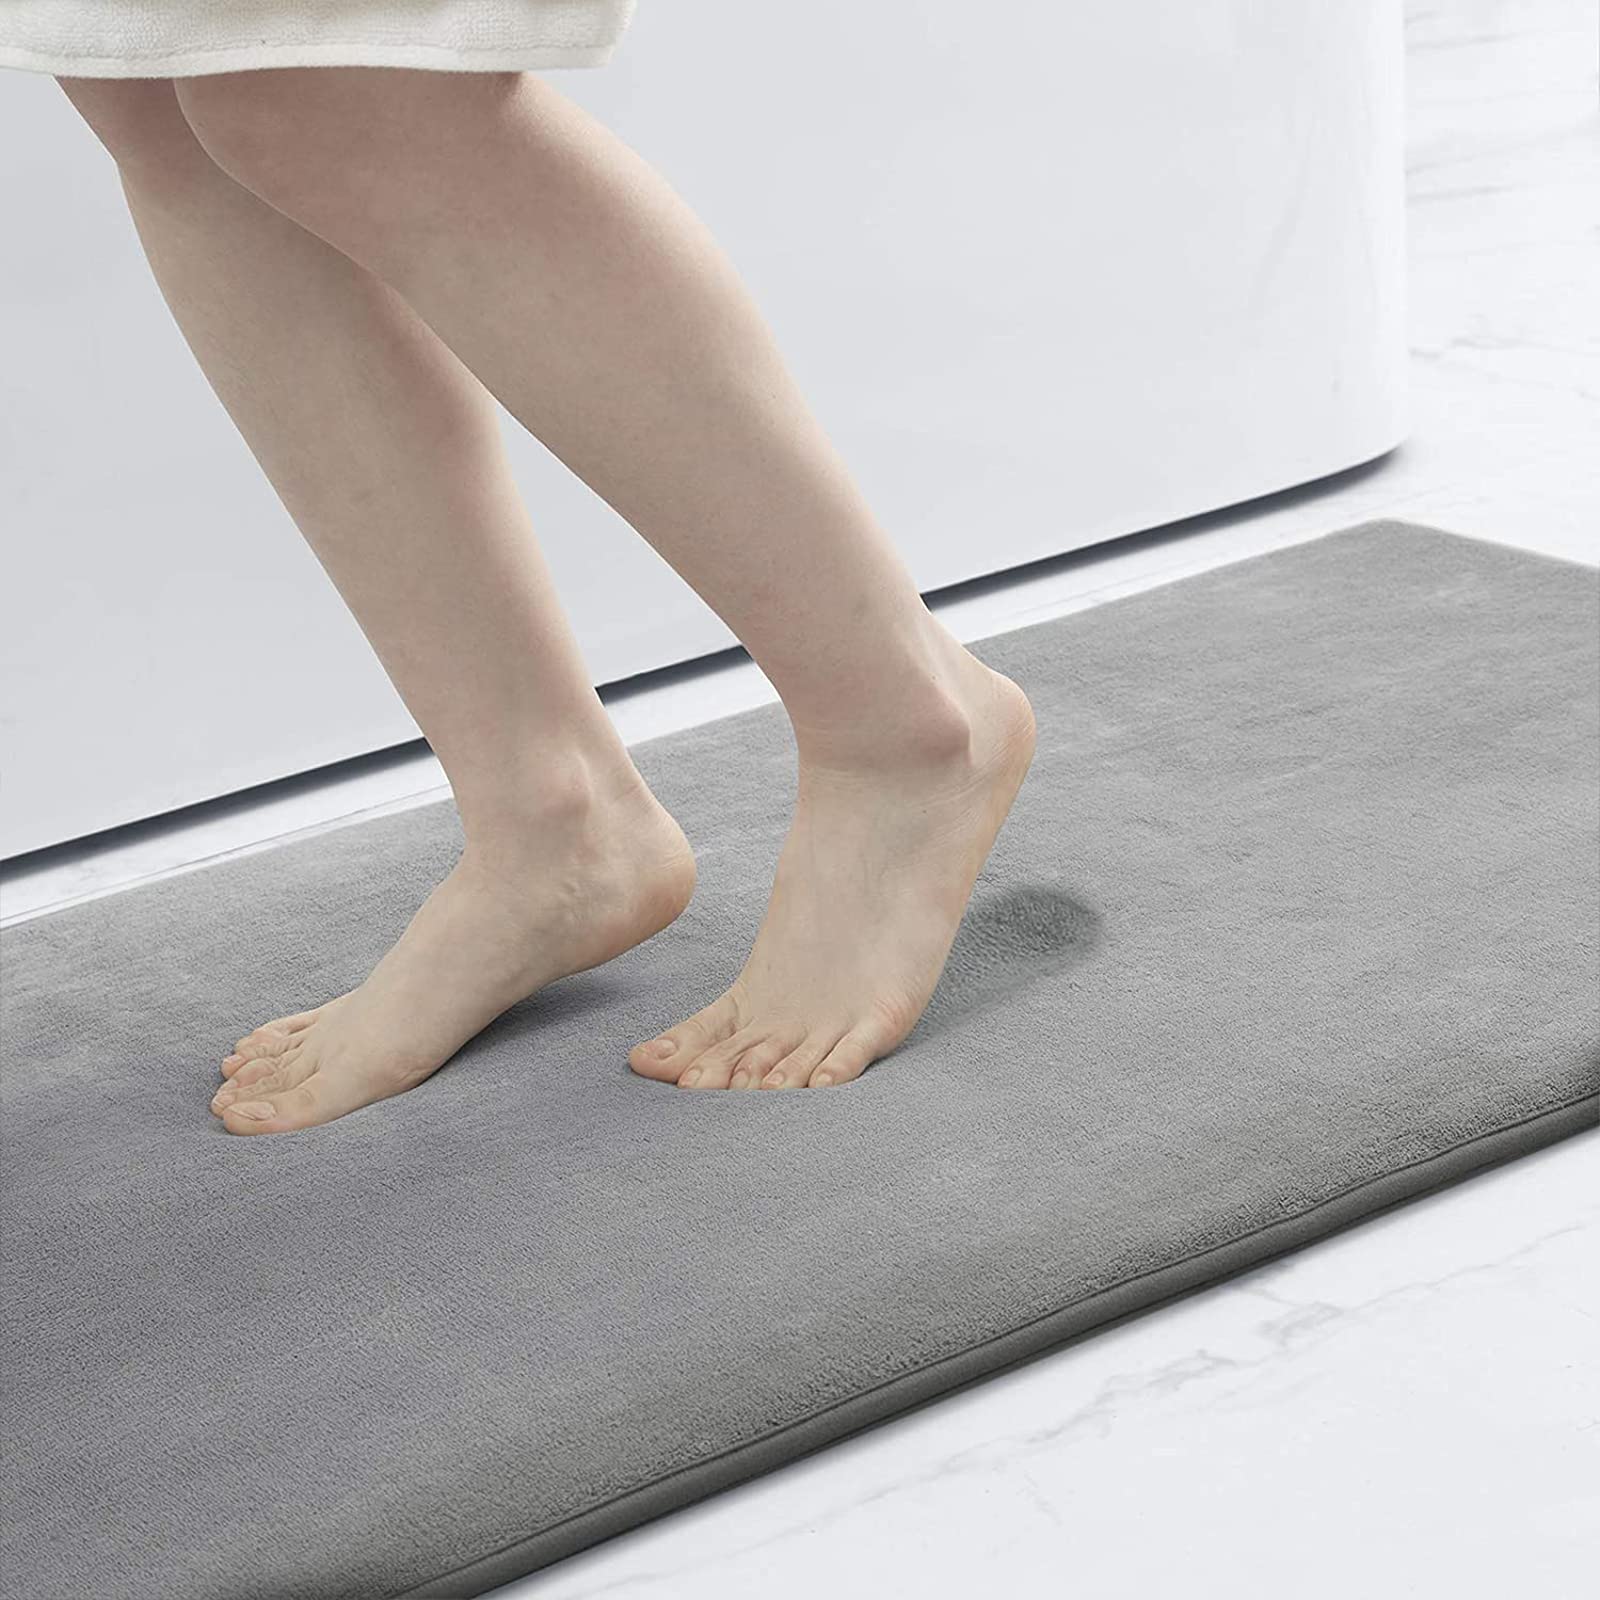 Memory Foam Bath Mat Anti-Slip Shower Carpet Soft Foot Pad Decoration Floor Protector Absorbent Quick Dry Bathroom Rug Mats & Rugs DailyAlertDeals 43x61cm(17x24inch) China gray